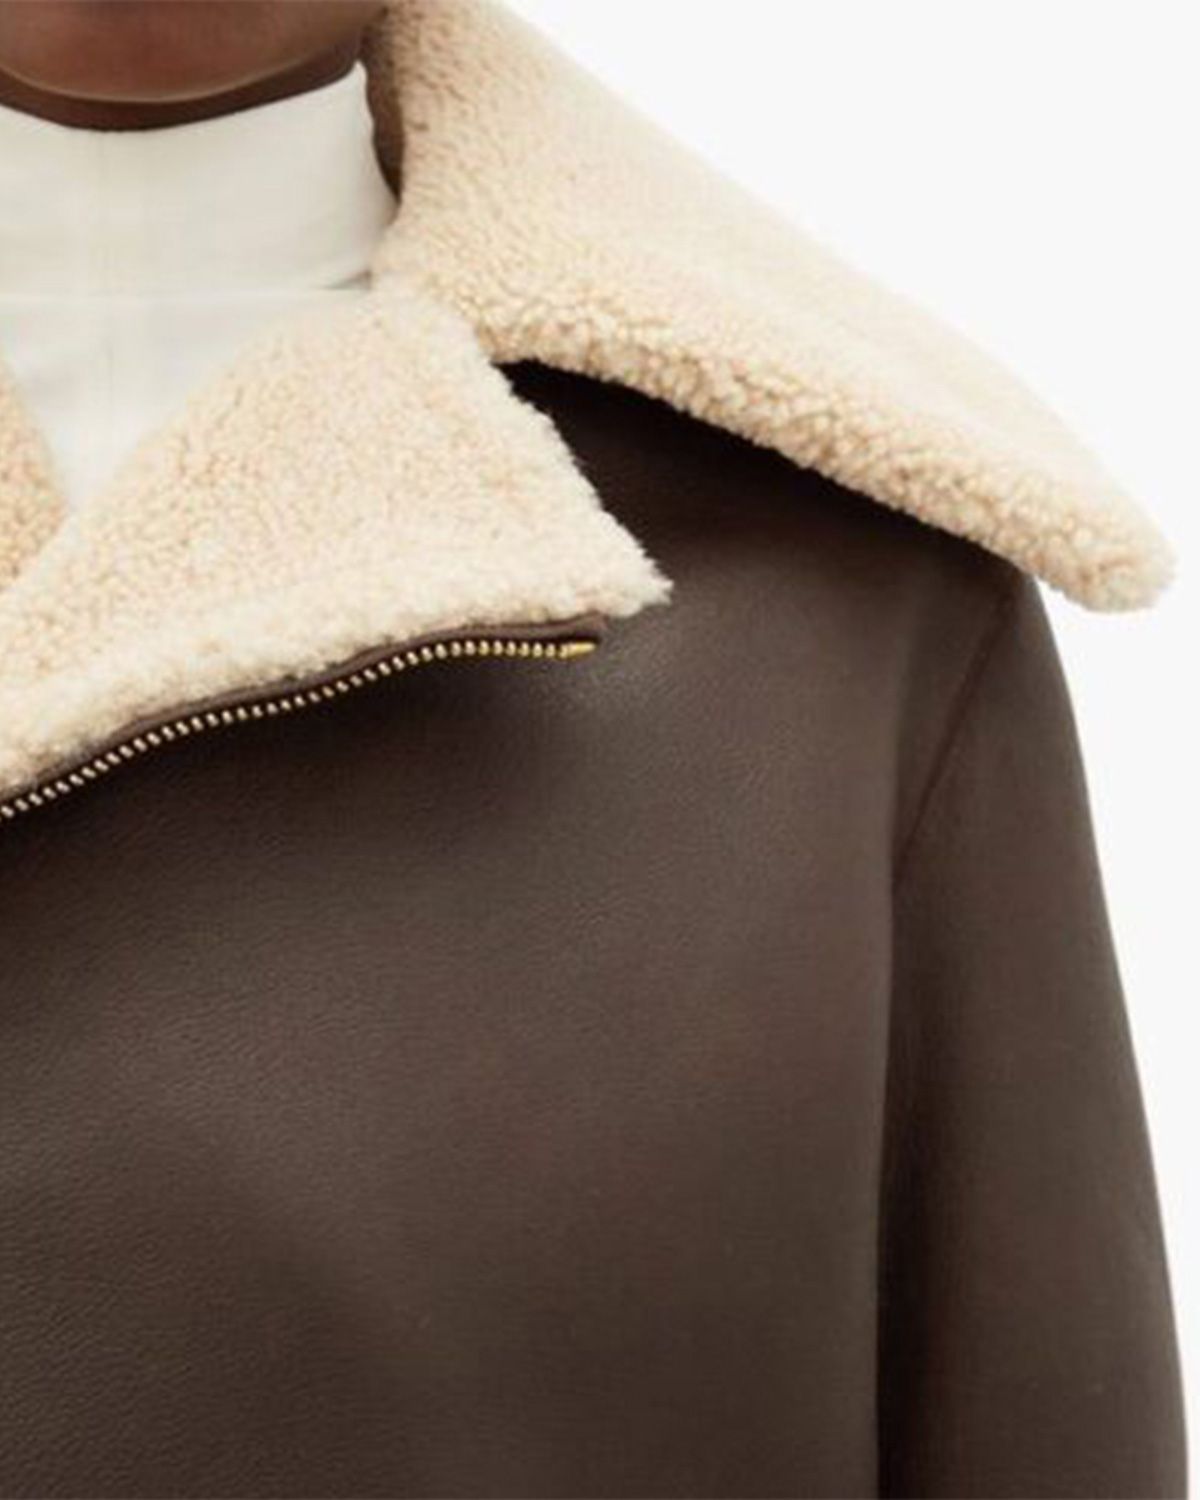 Women's Chocolate Brown Sheepskin Leather Jacket | Elite Jacket